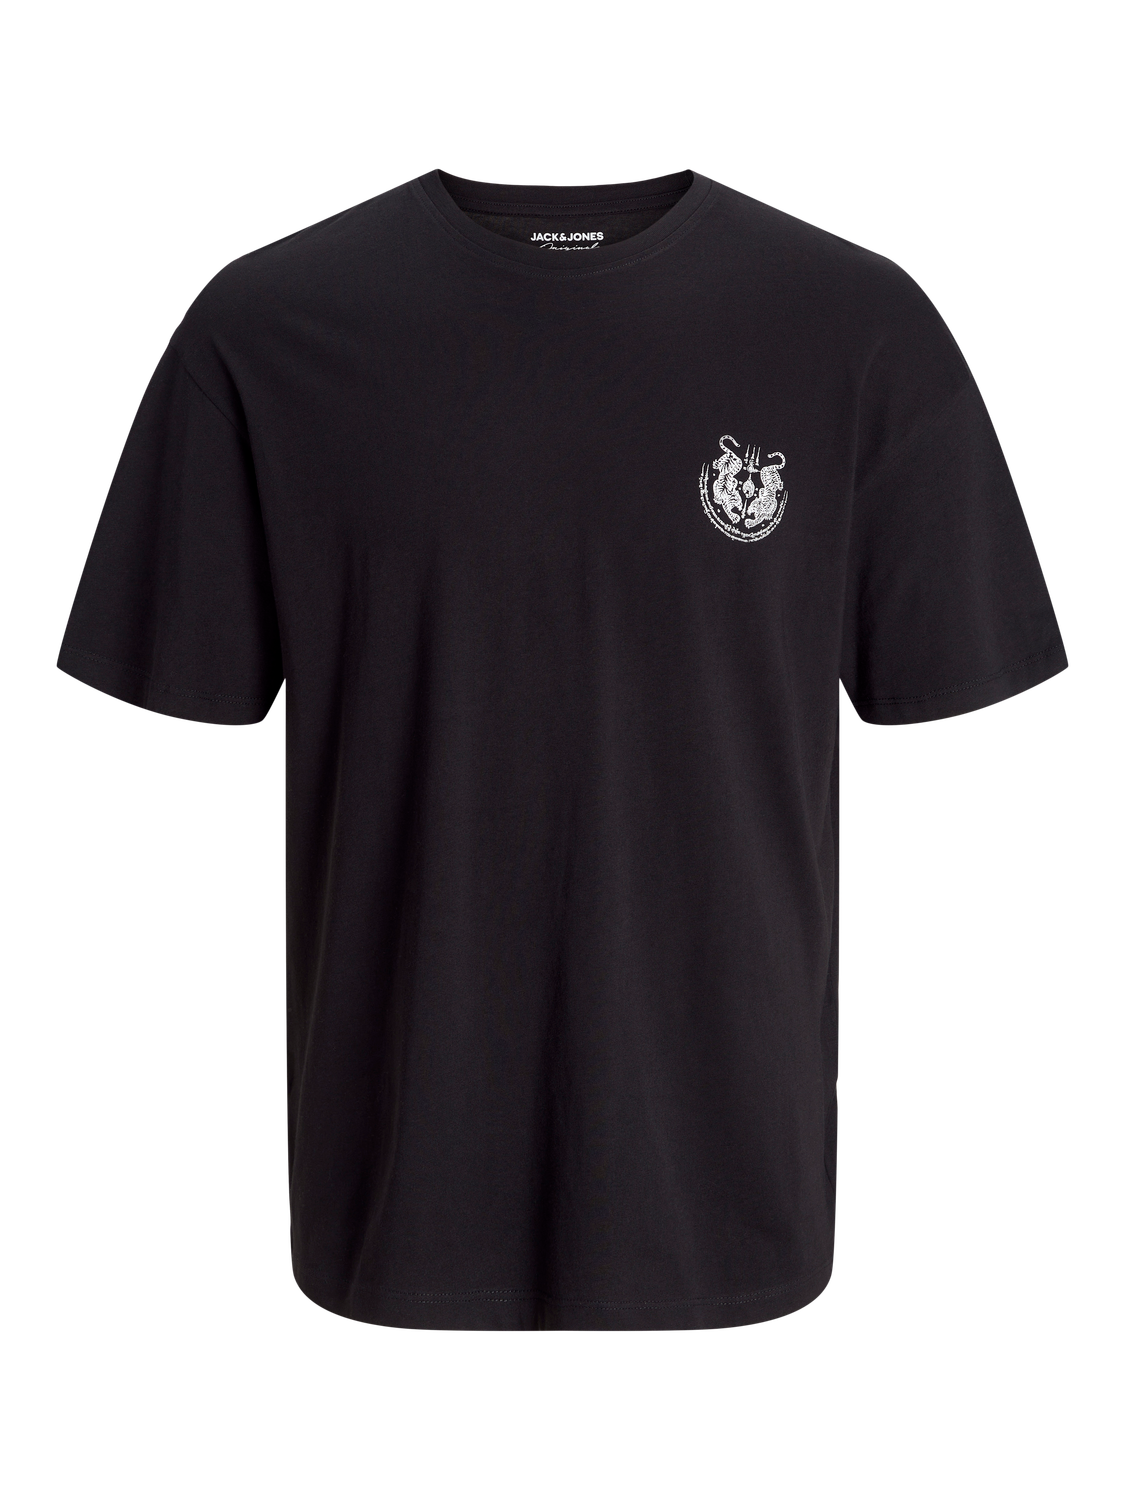 Jack & Jones T-shirt Stampato Girocollo -Black - 12267274